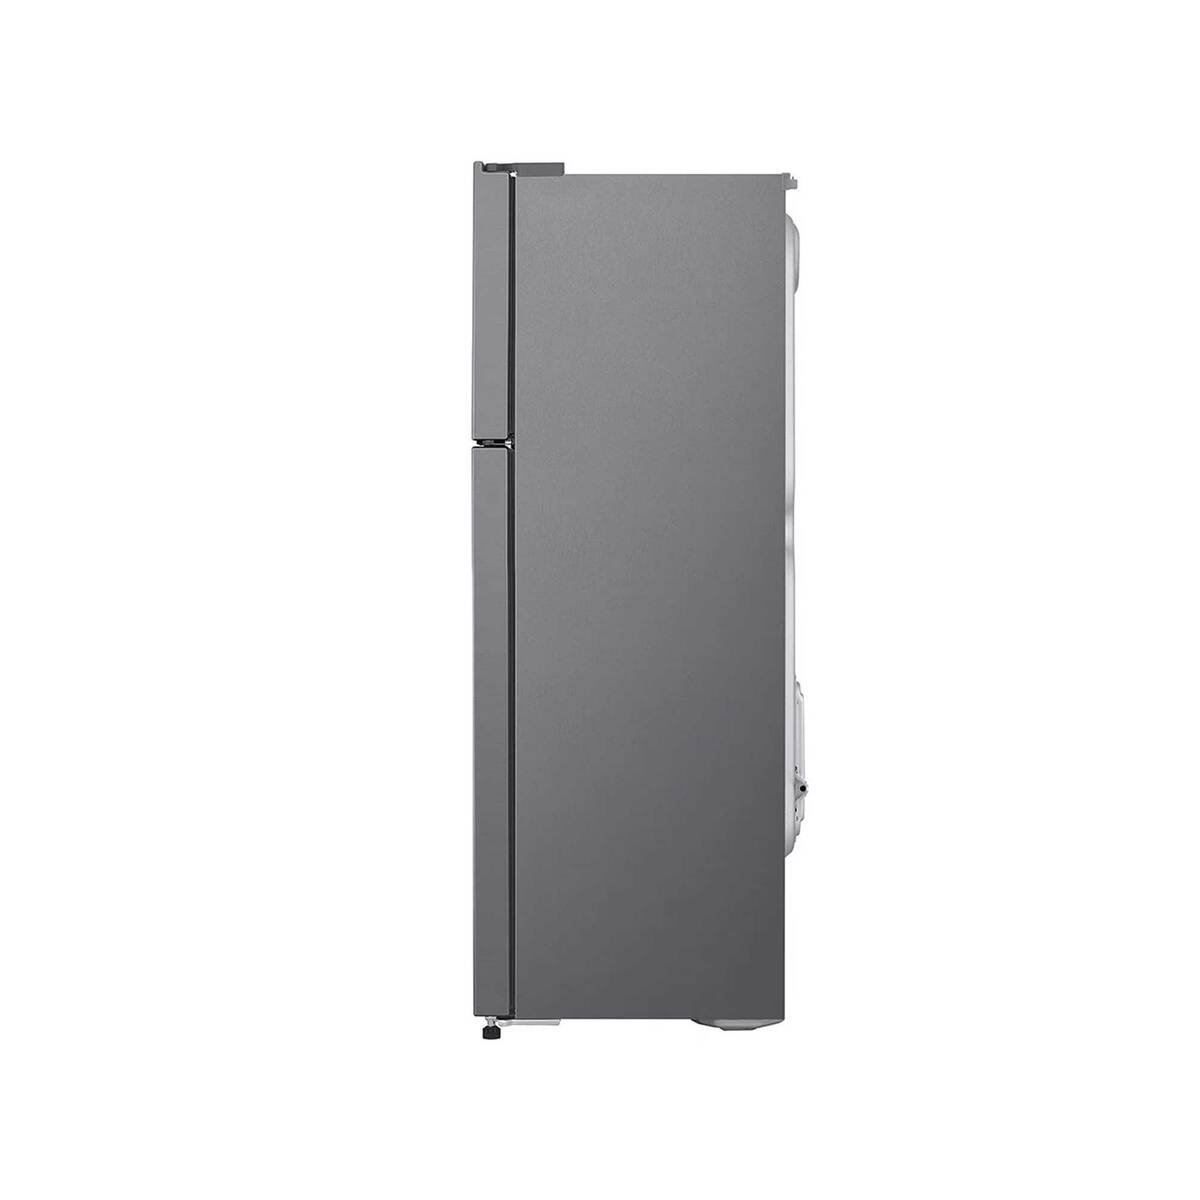 LG Double Door Refrigerator GN-B242SQBB 187LTR